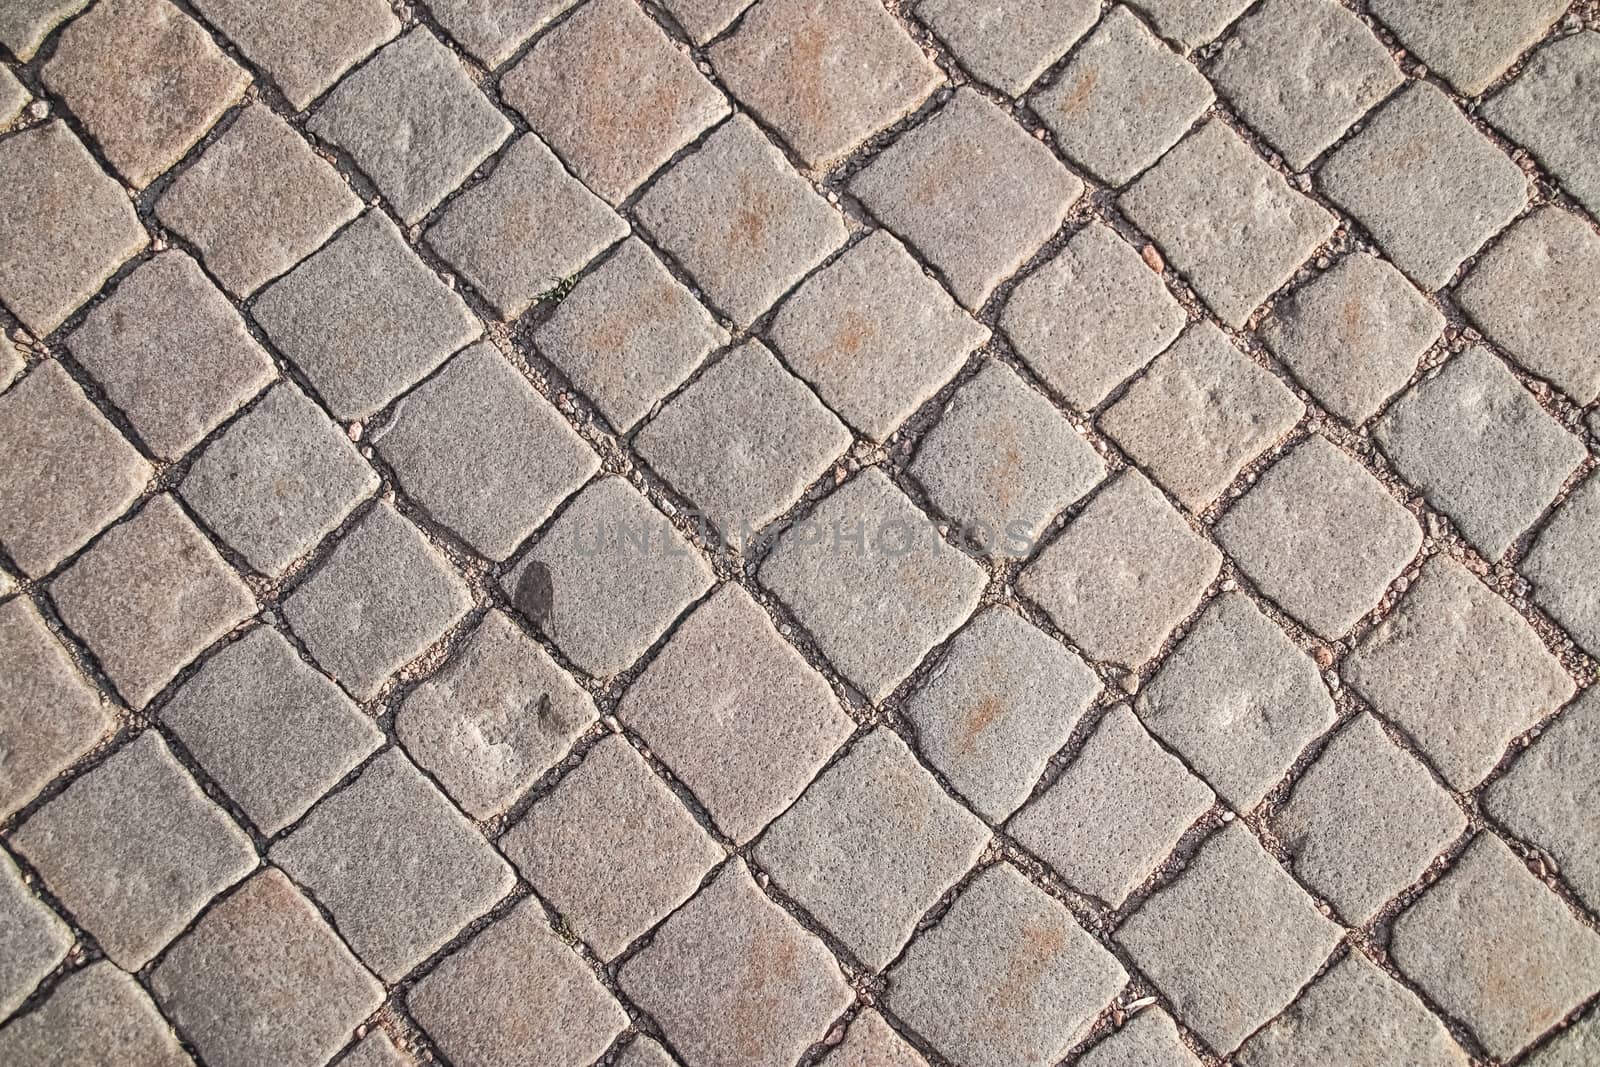 Stone Square brick block walk way for texture background. by anotestocker